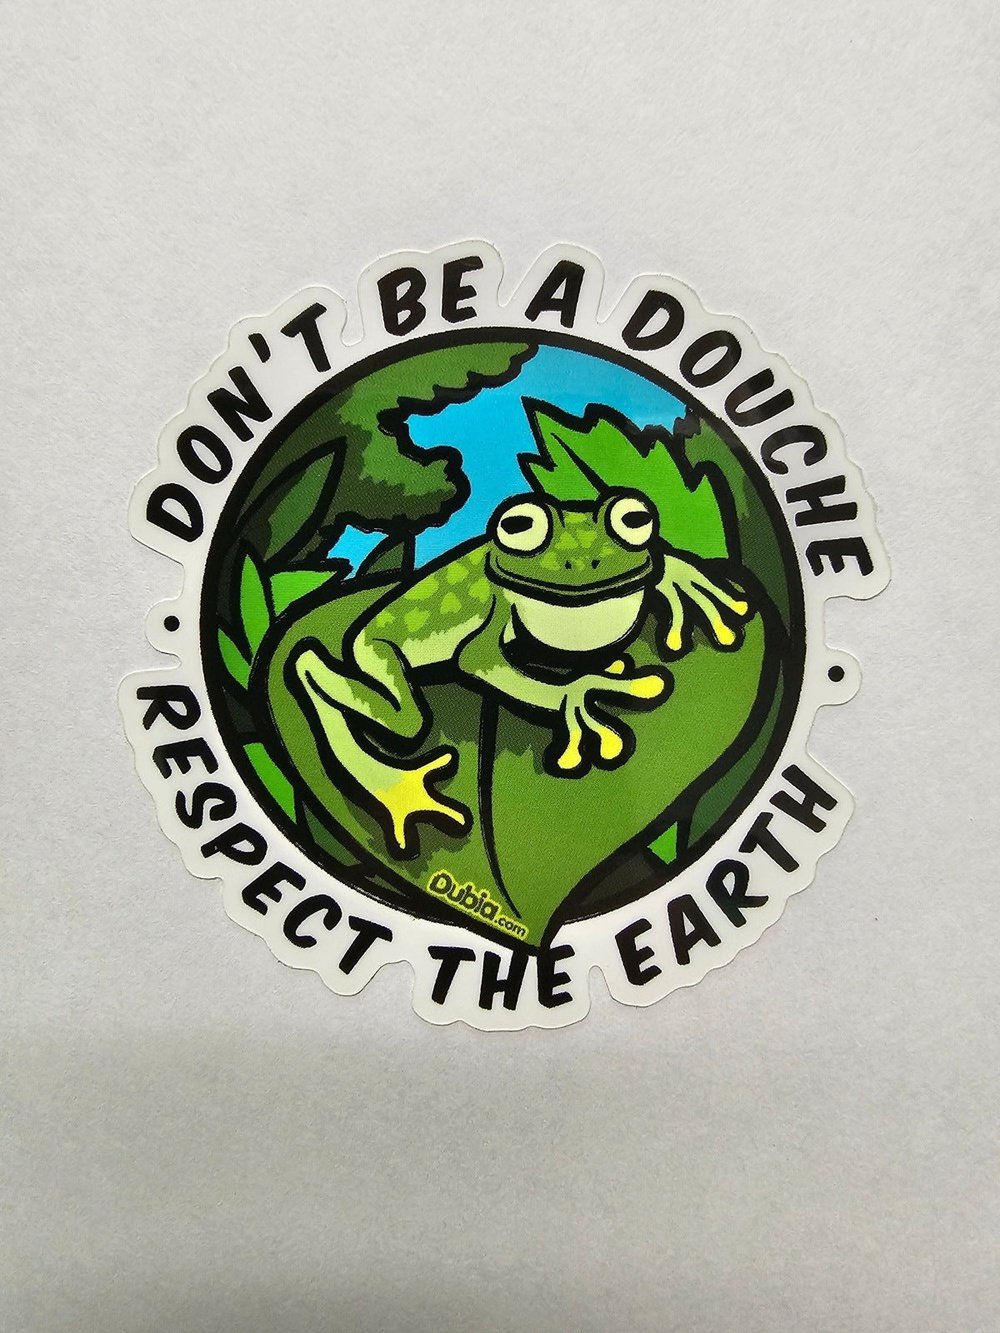 Don't Be A Douche Sticker